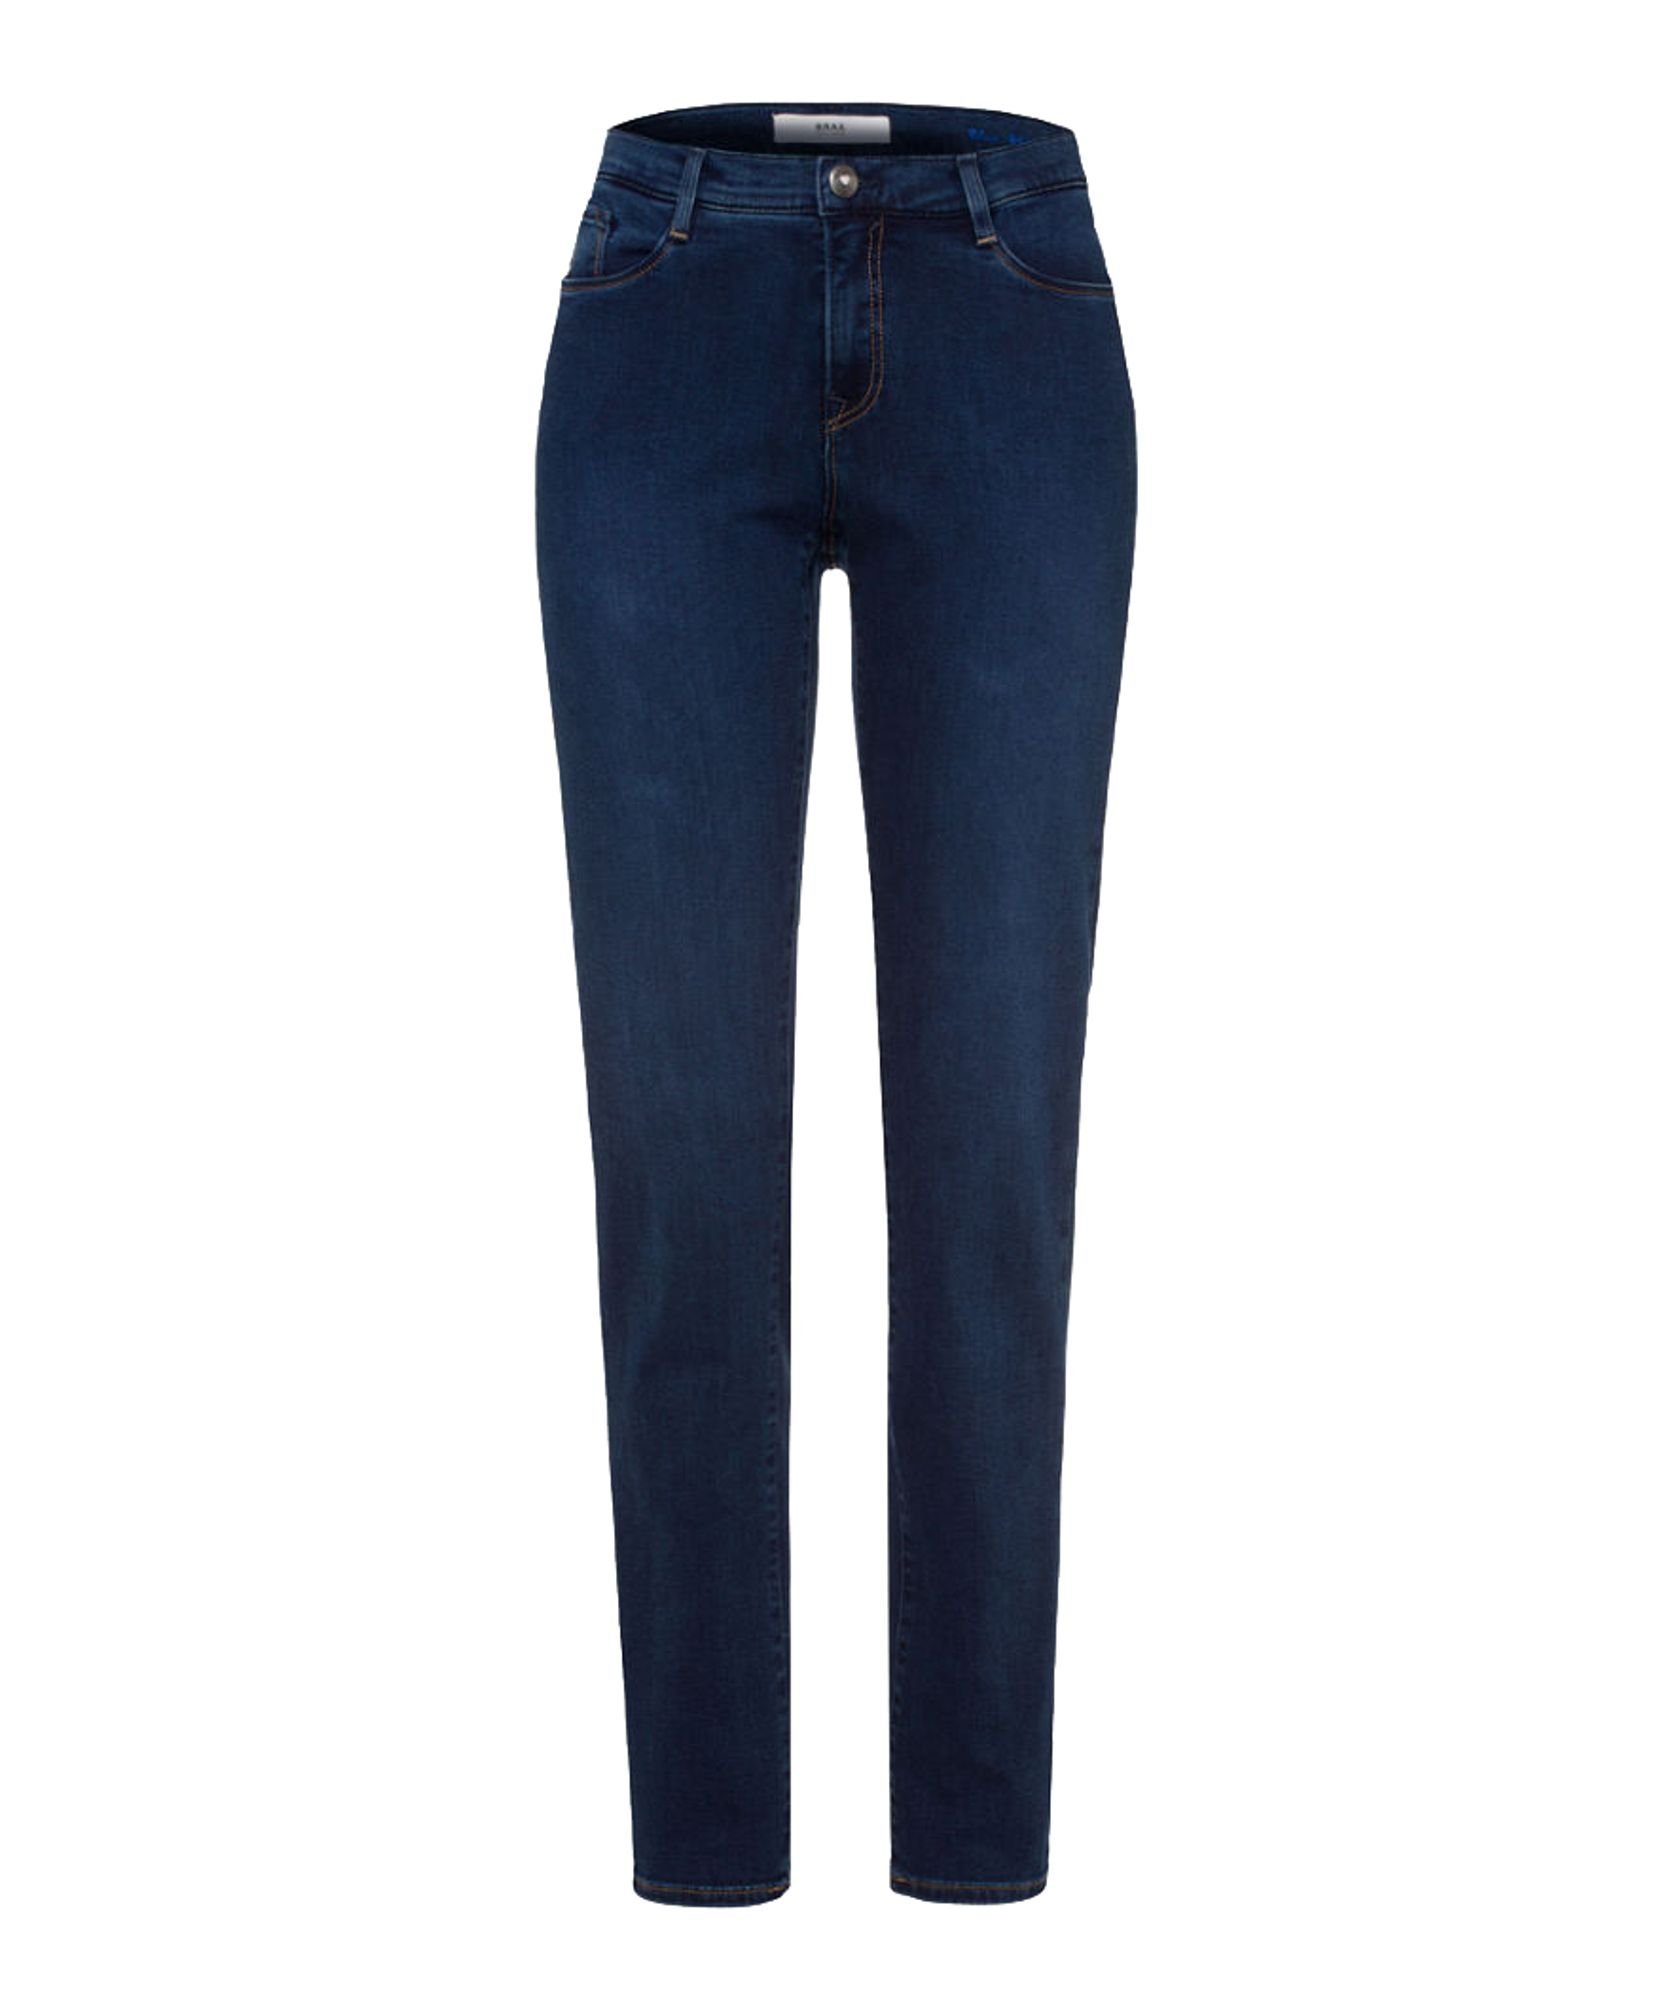 Brax 5-Pocket-Jeans 70-4000 SLIGHTLY USED REGULAR BLUE (25)